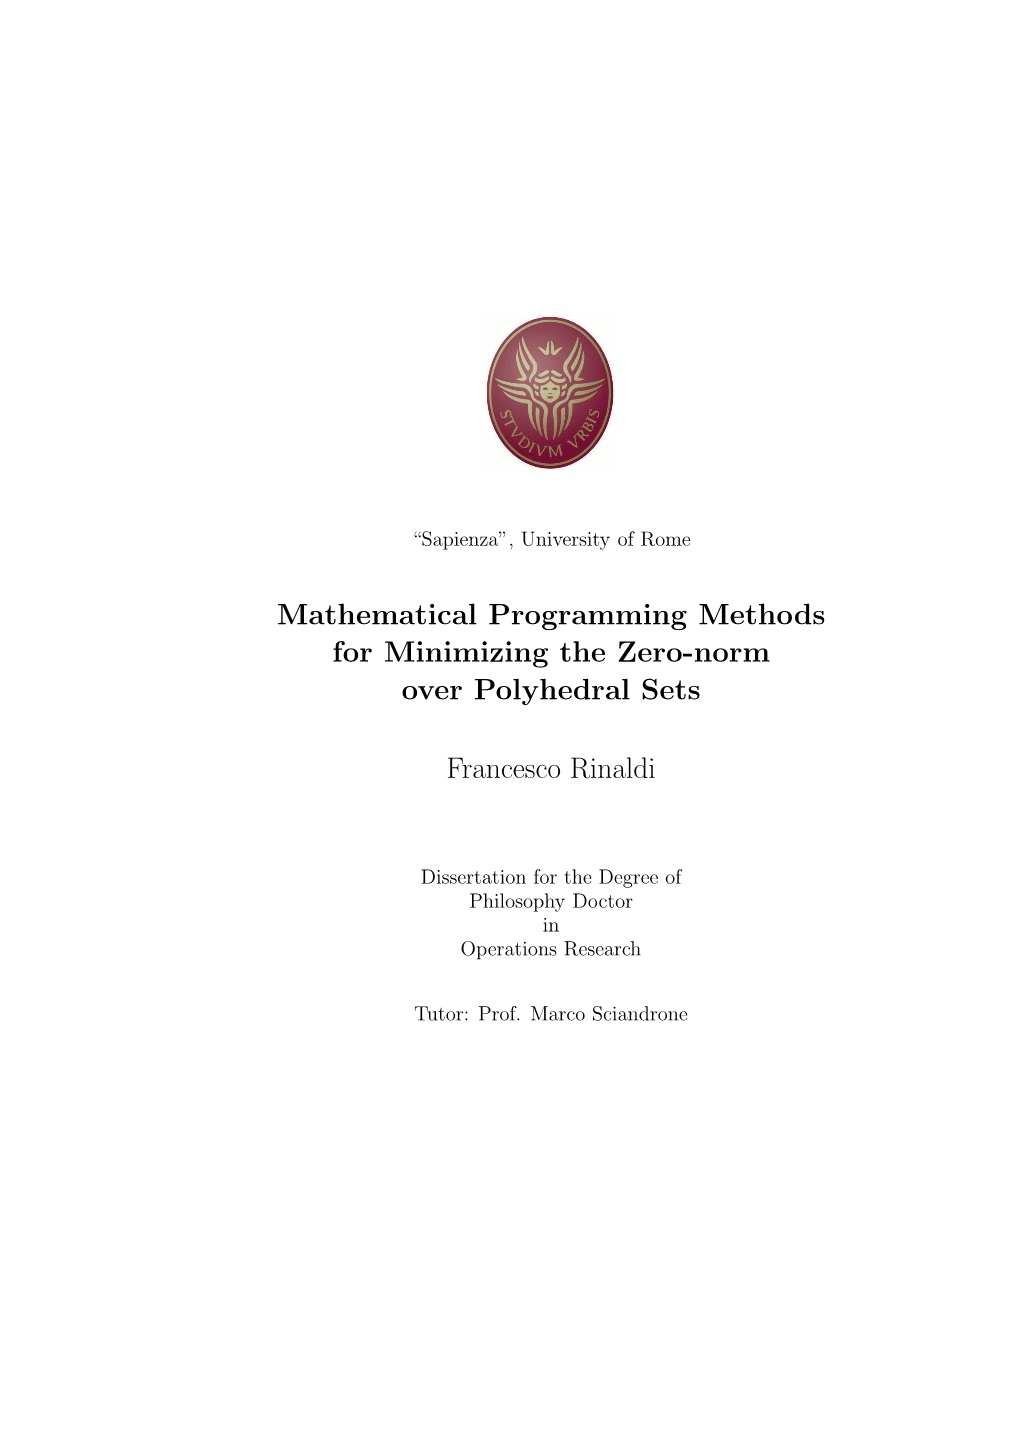 Mathematical Programming Methods for Minimizing the Zero-Norm Over Polyhedral Sets Francesco Rinaldi